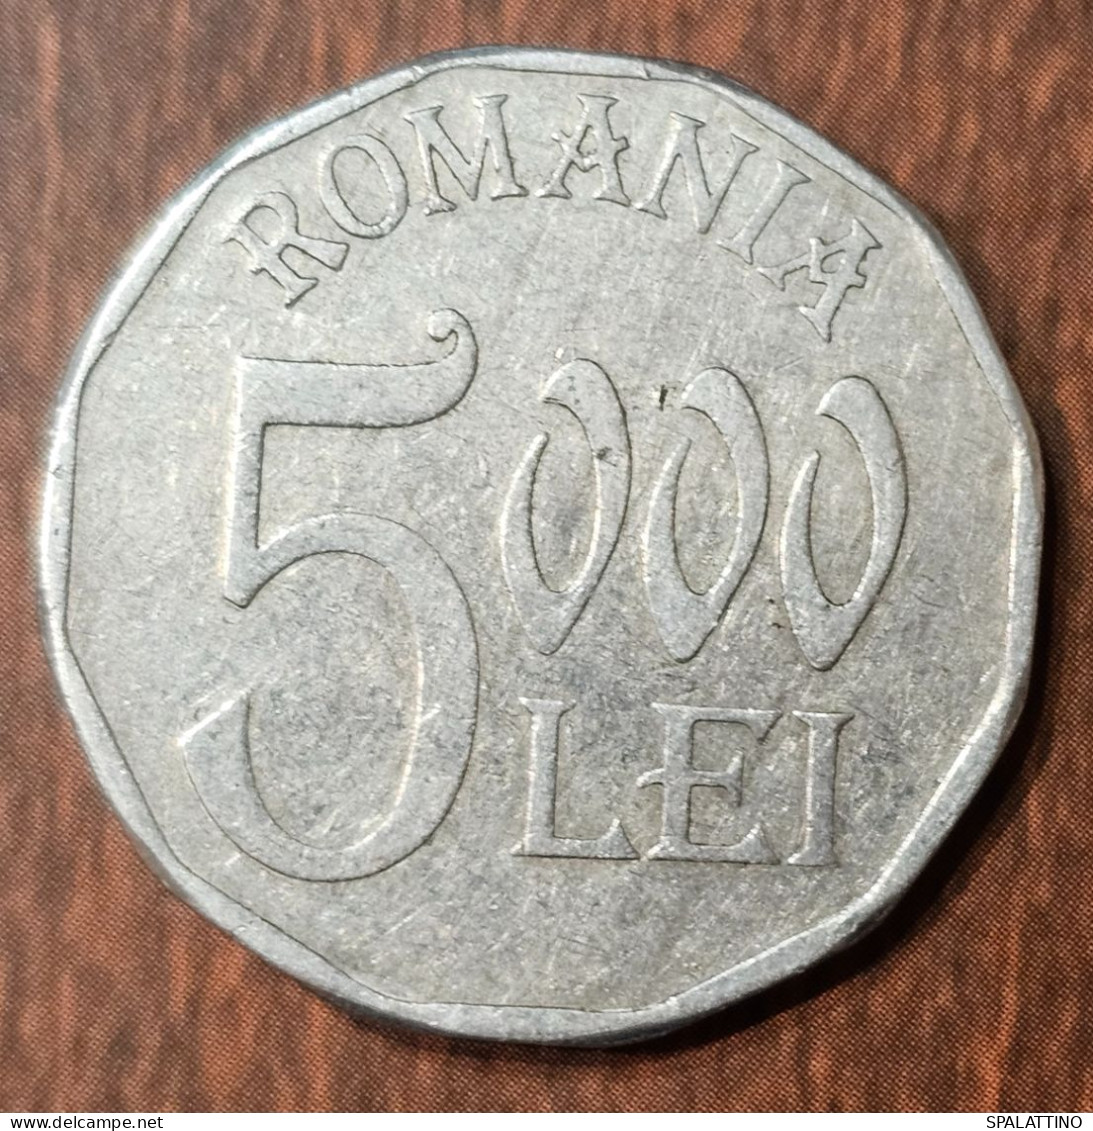 ROMANIA- 5000 LEI 2001. - Romania